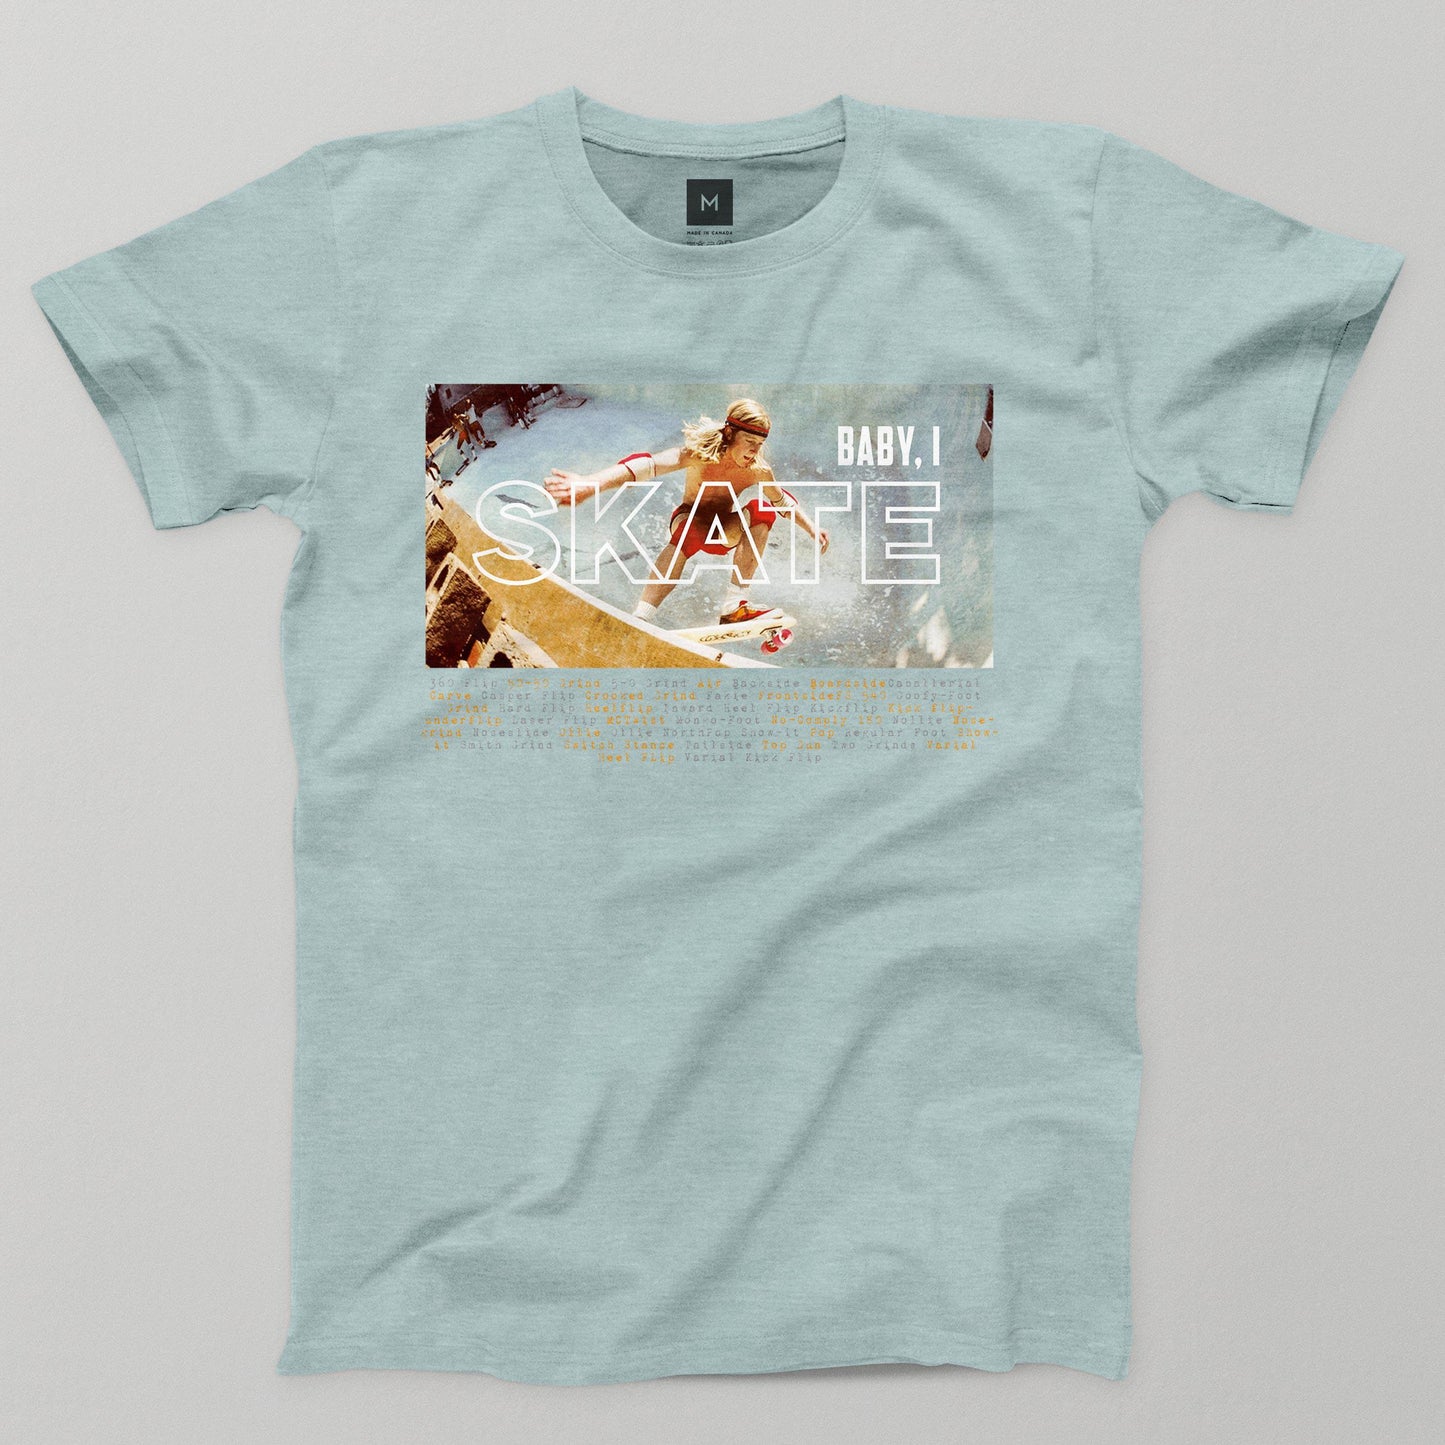 Baby, I Skate Men's/Unisex T-Shirt T-shirt by DIRT & GLORY